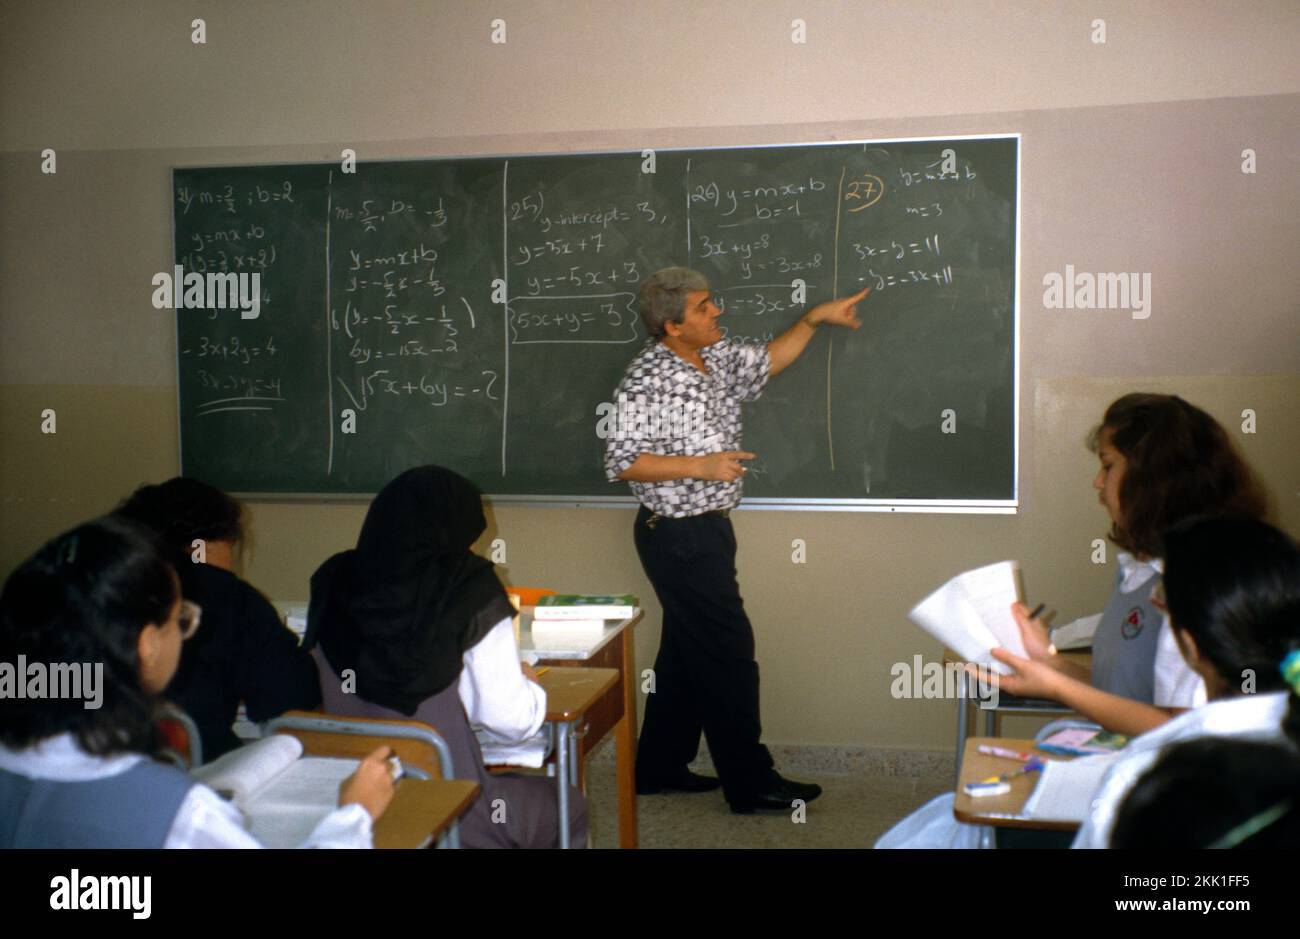 Abu Dhabi UAE High School Teacher at Blackboard Teaching Maths to Students Stock Photo